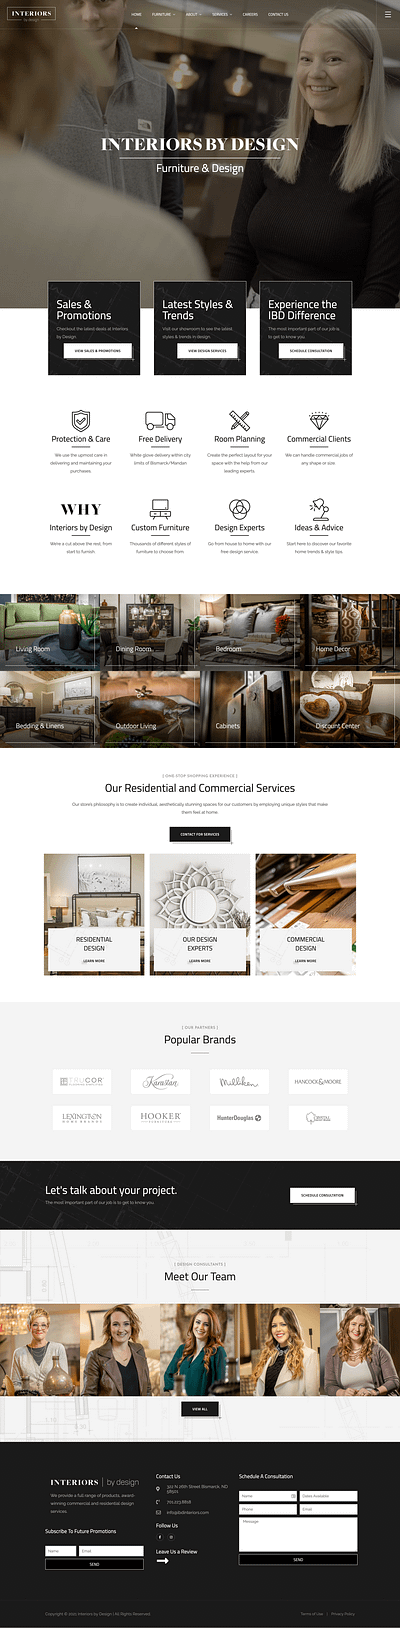 Interiors by Design - Web Design web design